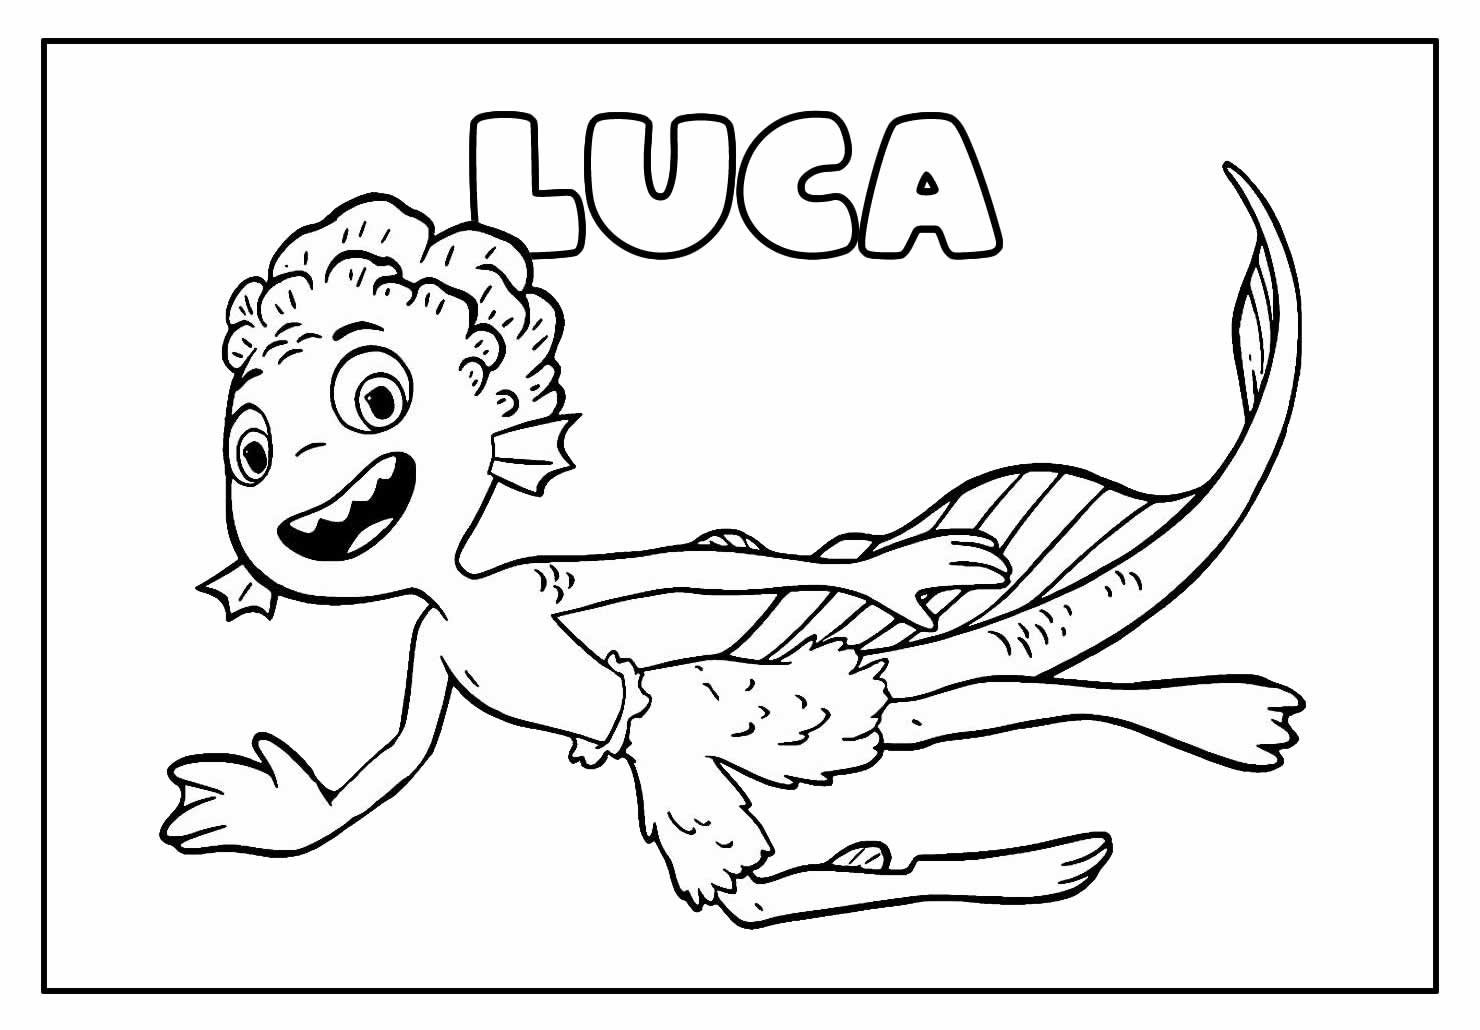 Desenho Educativo de Luca para colorir